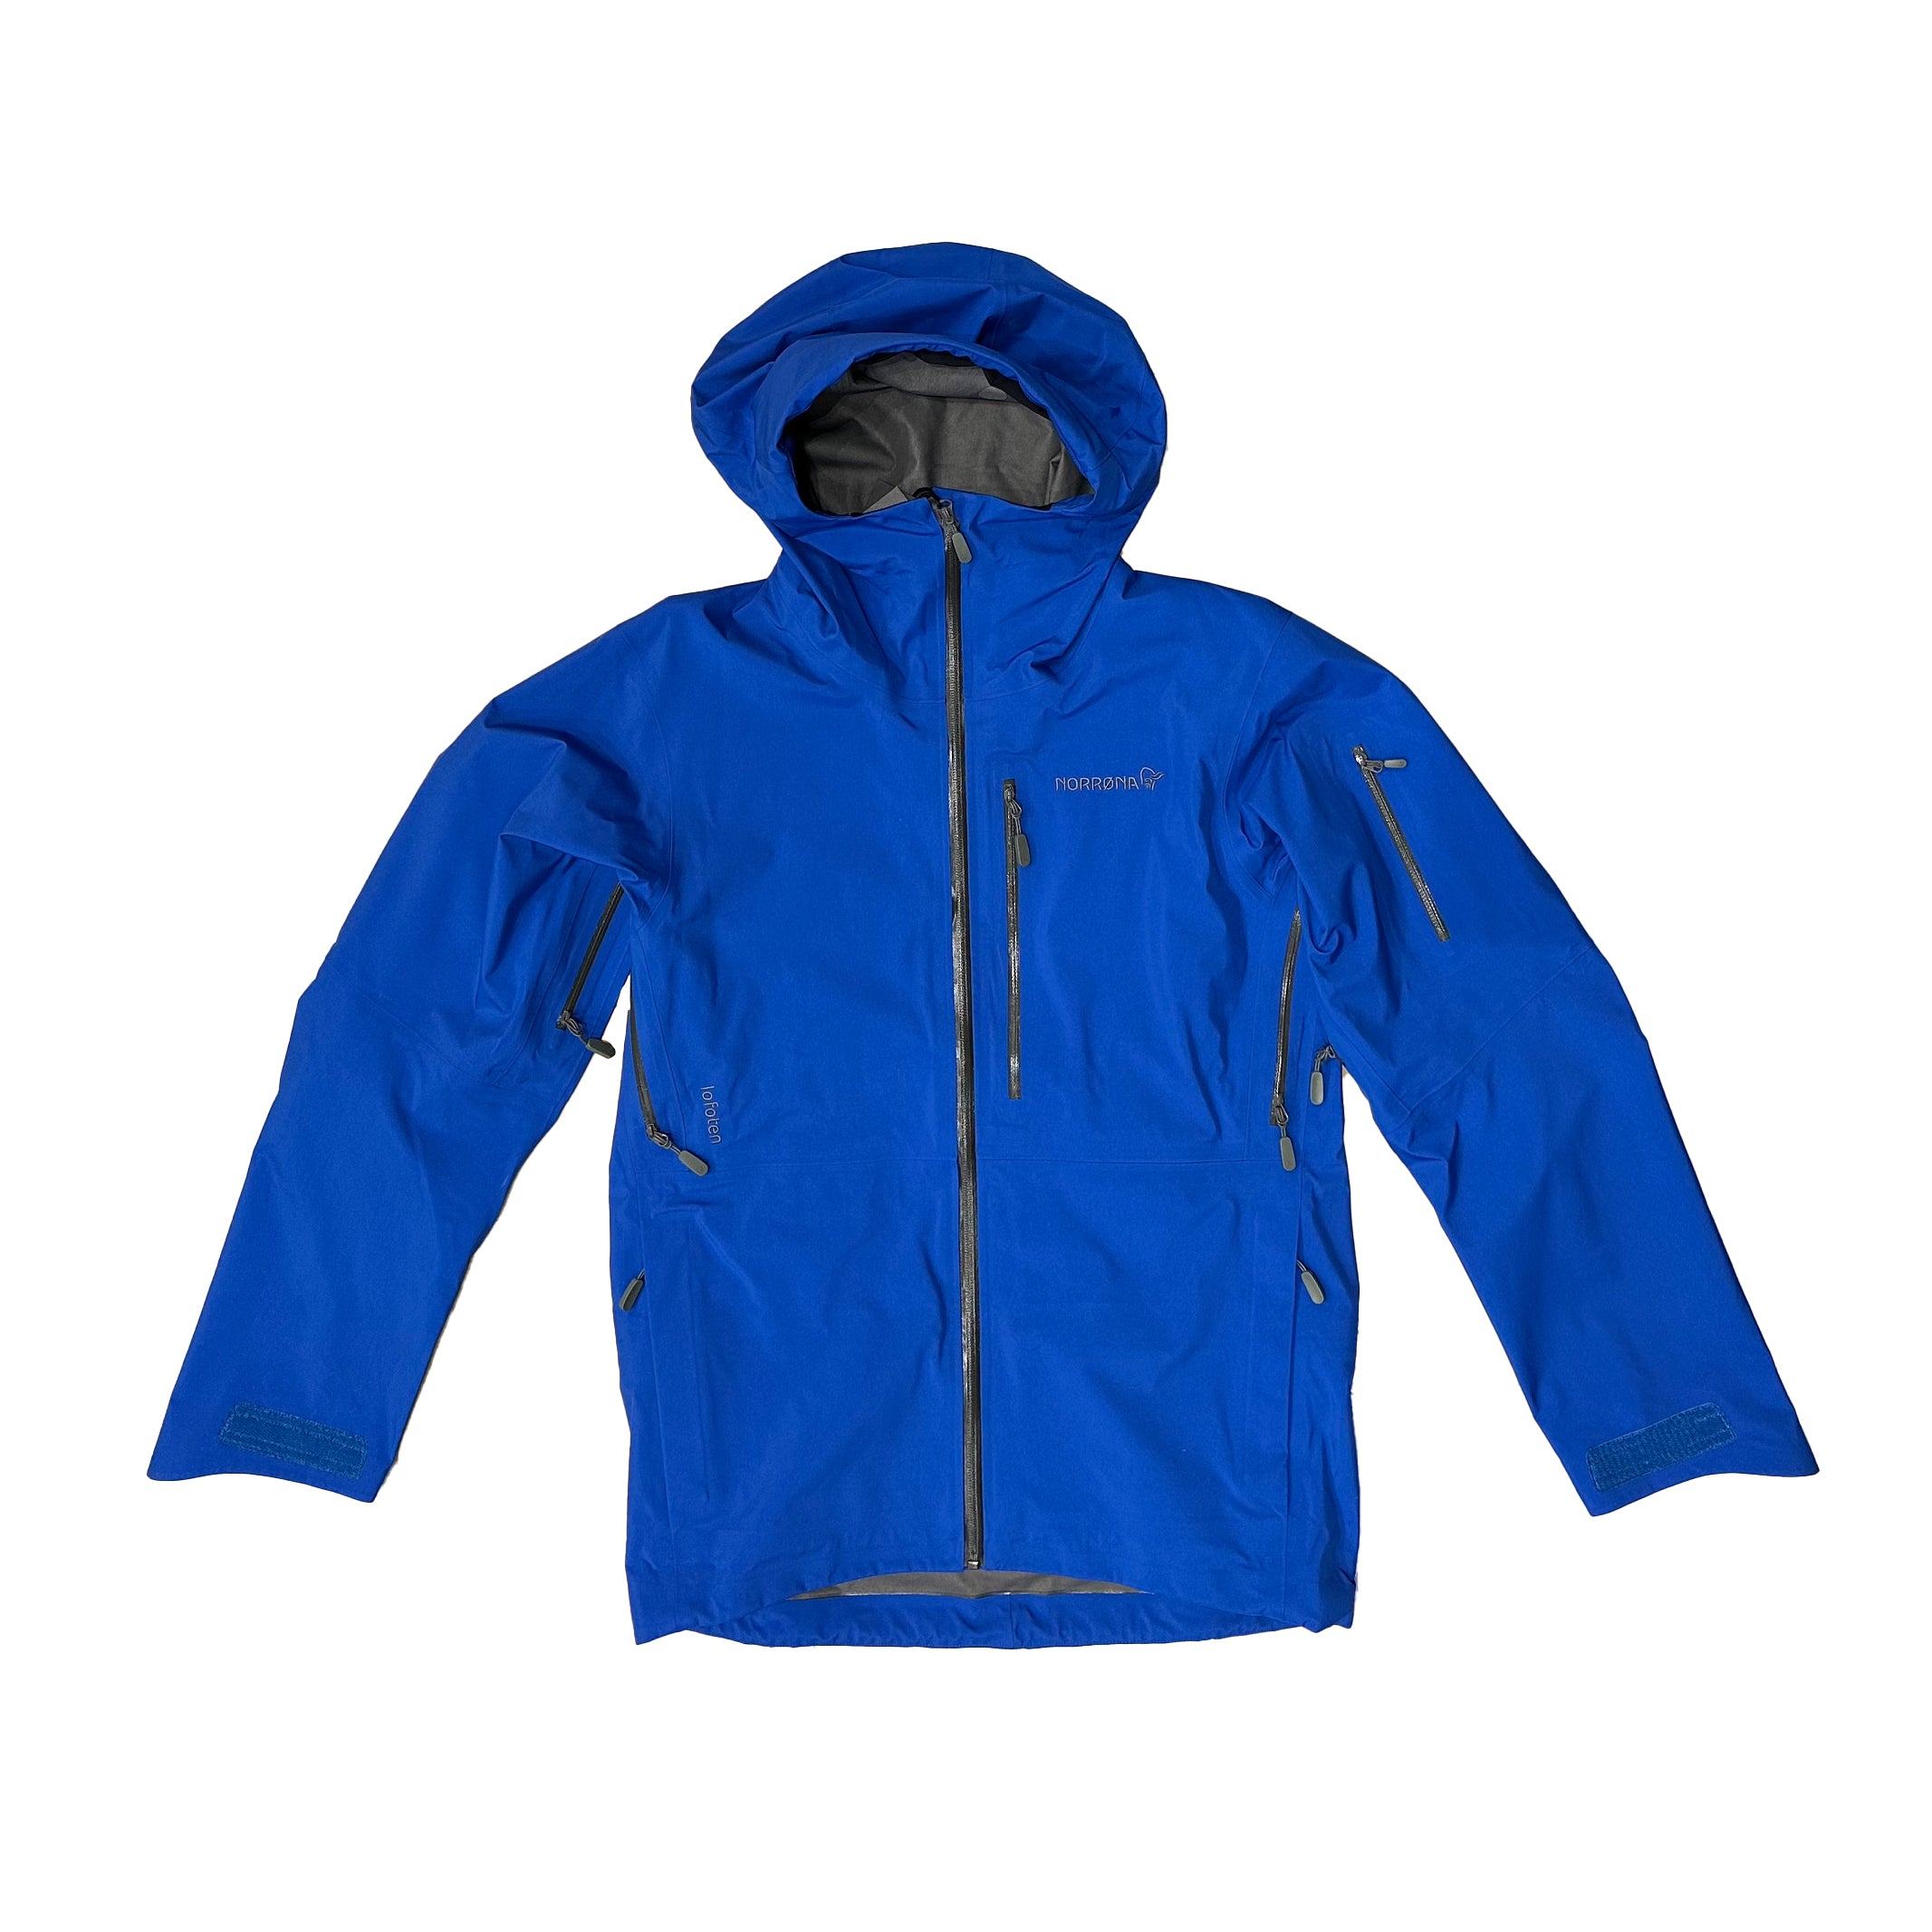 lofoen Gore-Tex insulated jacket